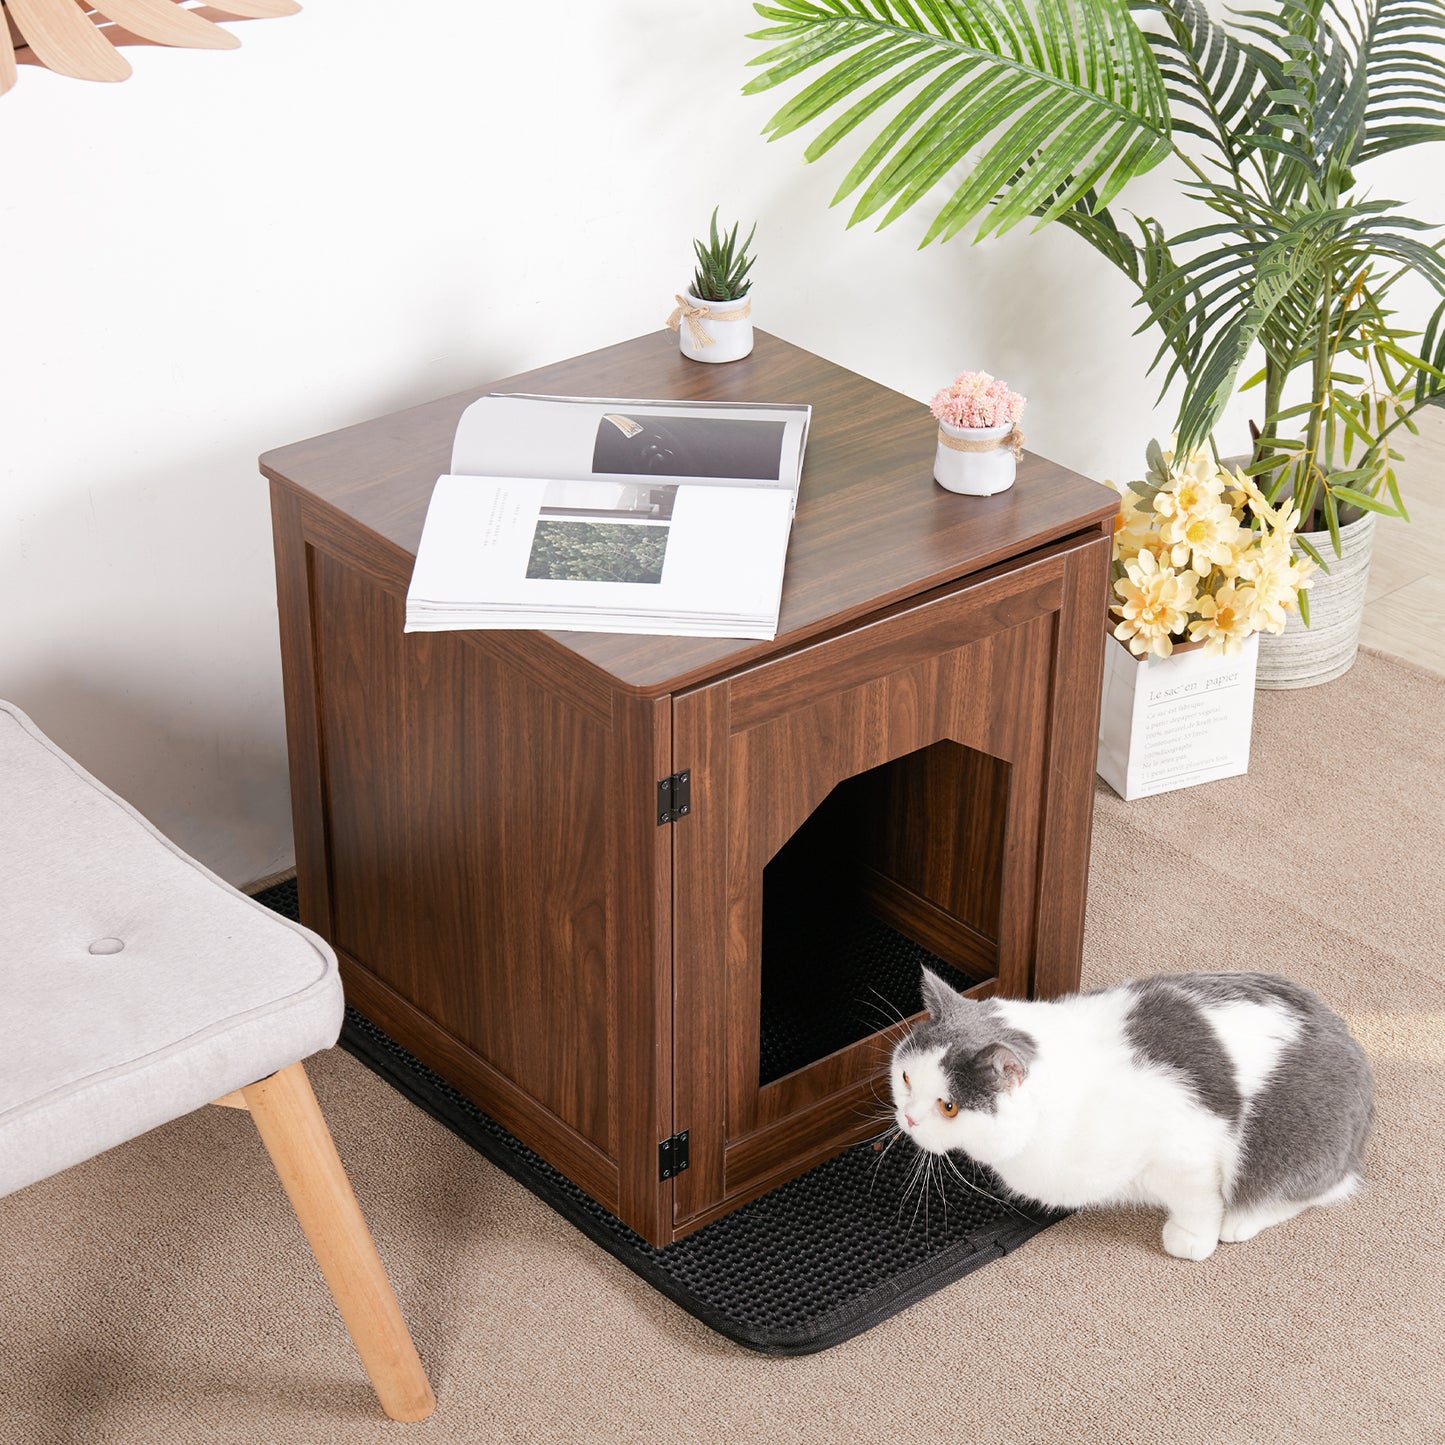 Bingopaw Cat Litter Cabinet Wooden House Kitty Furniture Box with Cat Litter